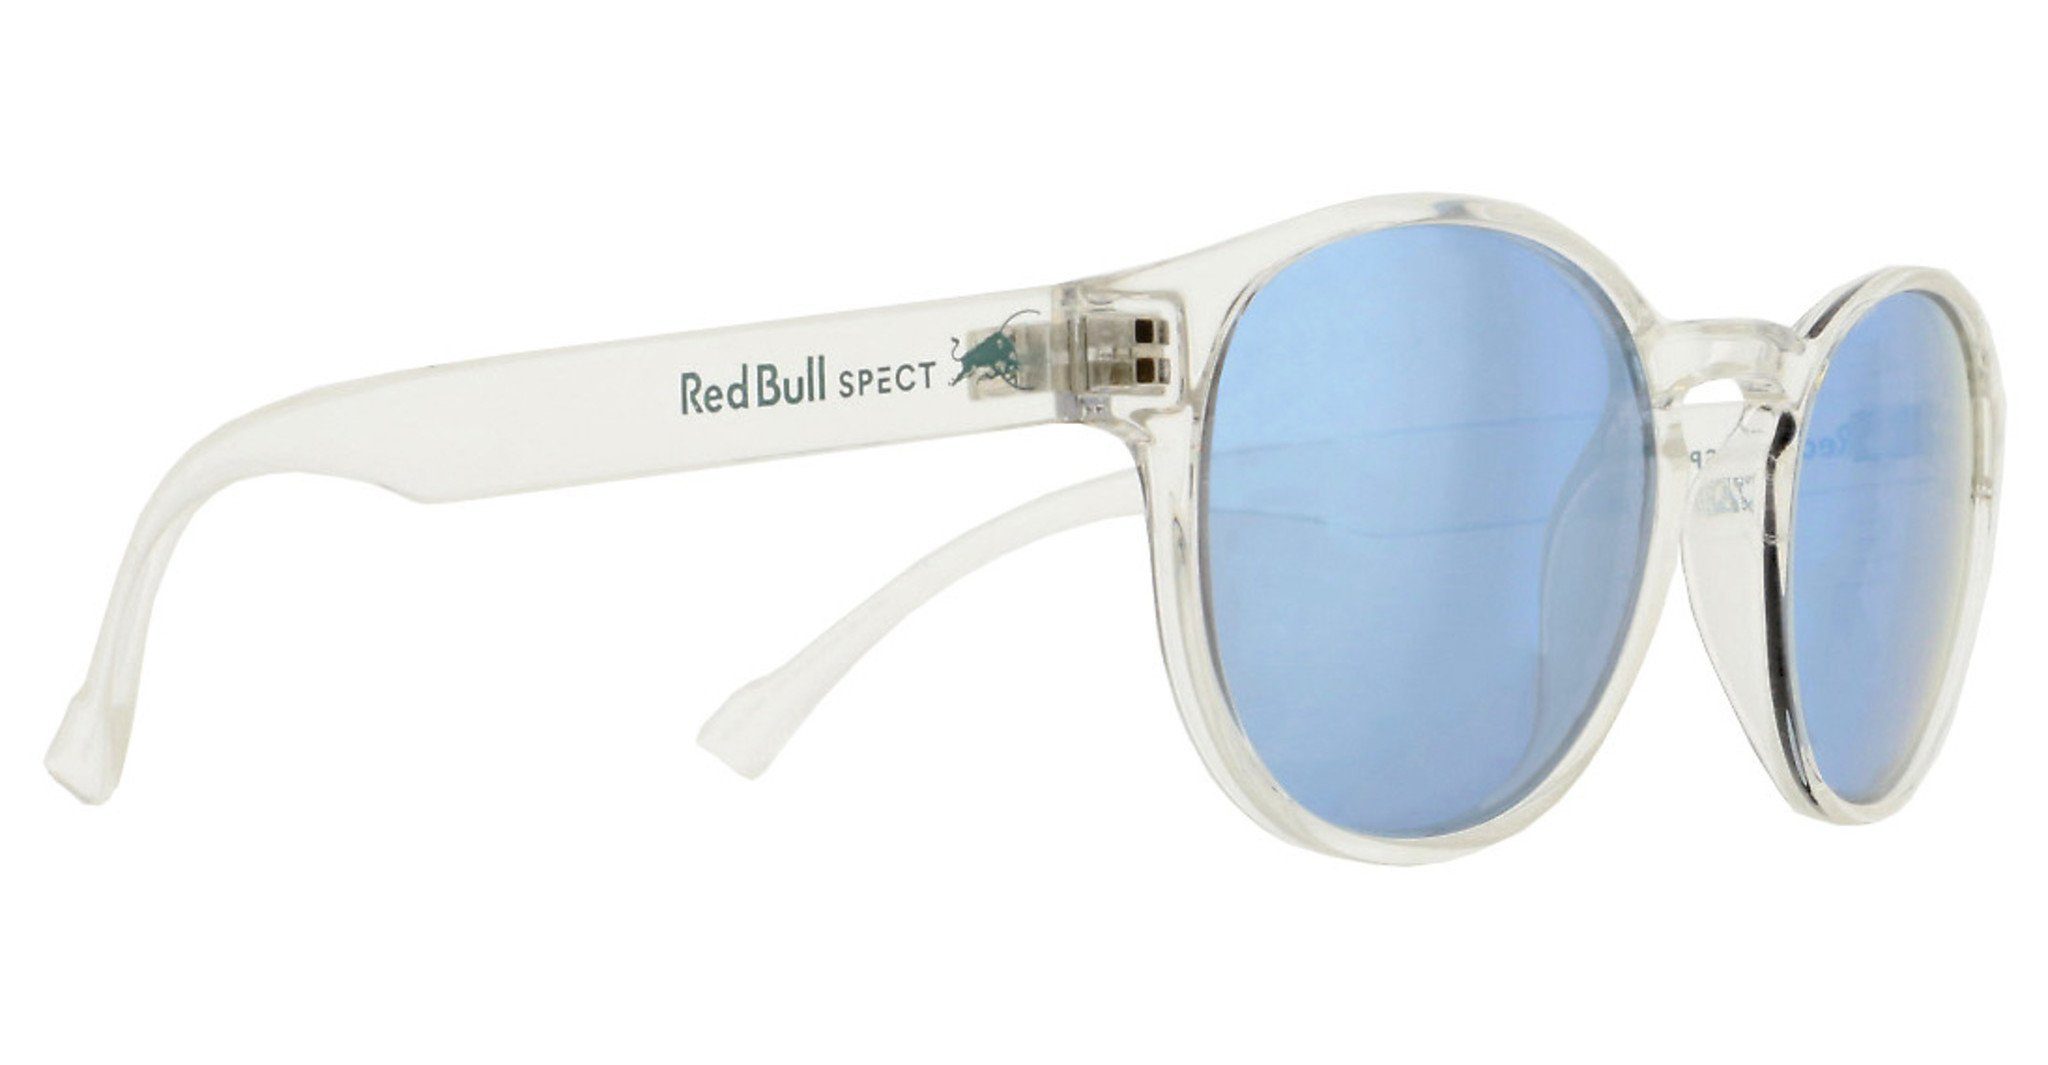 Red Bull Spect Sonnenbrille SOUL weiß